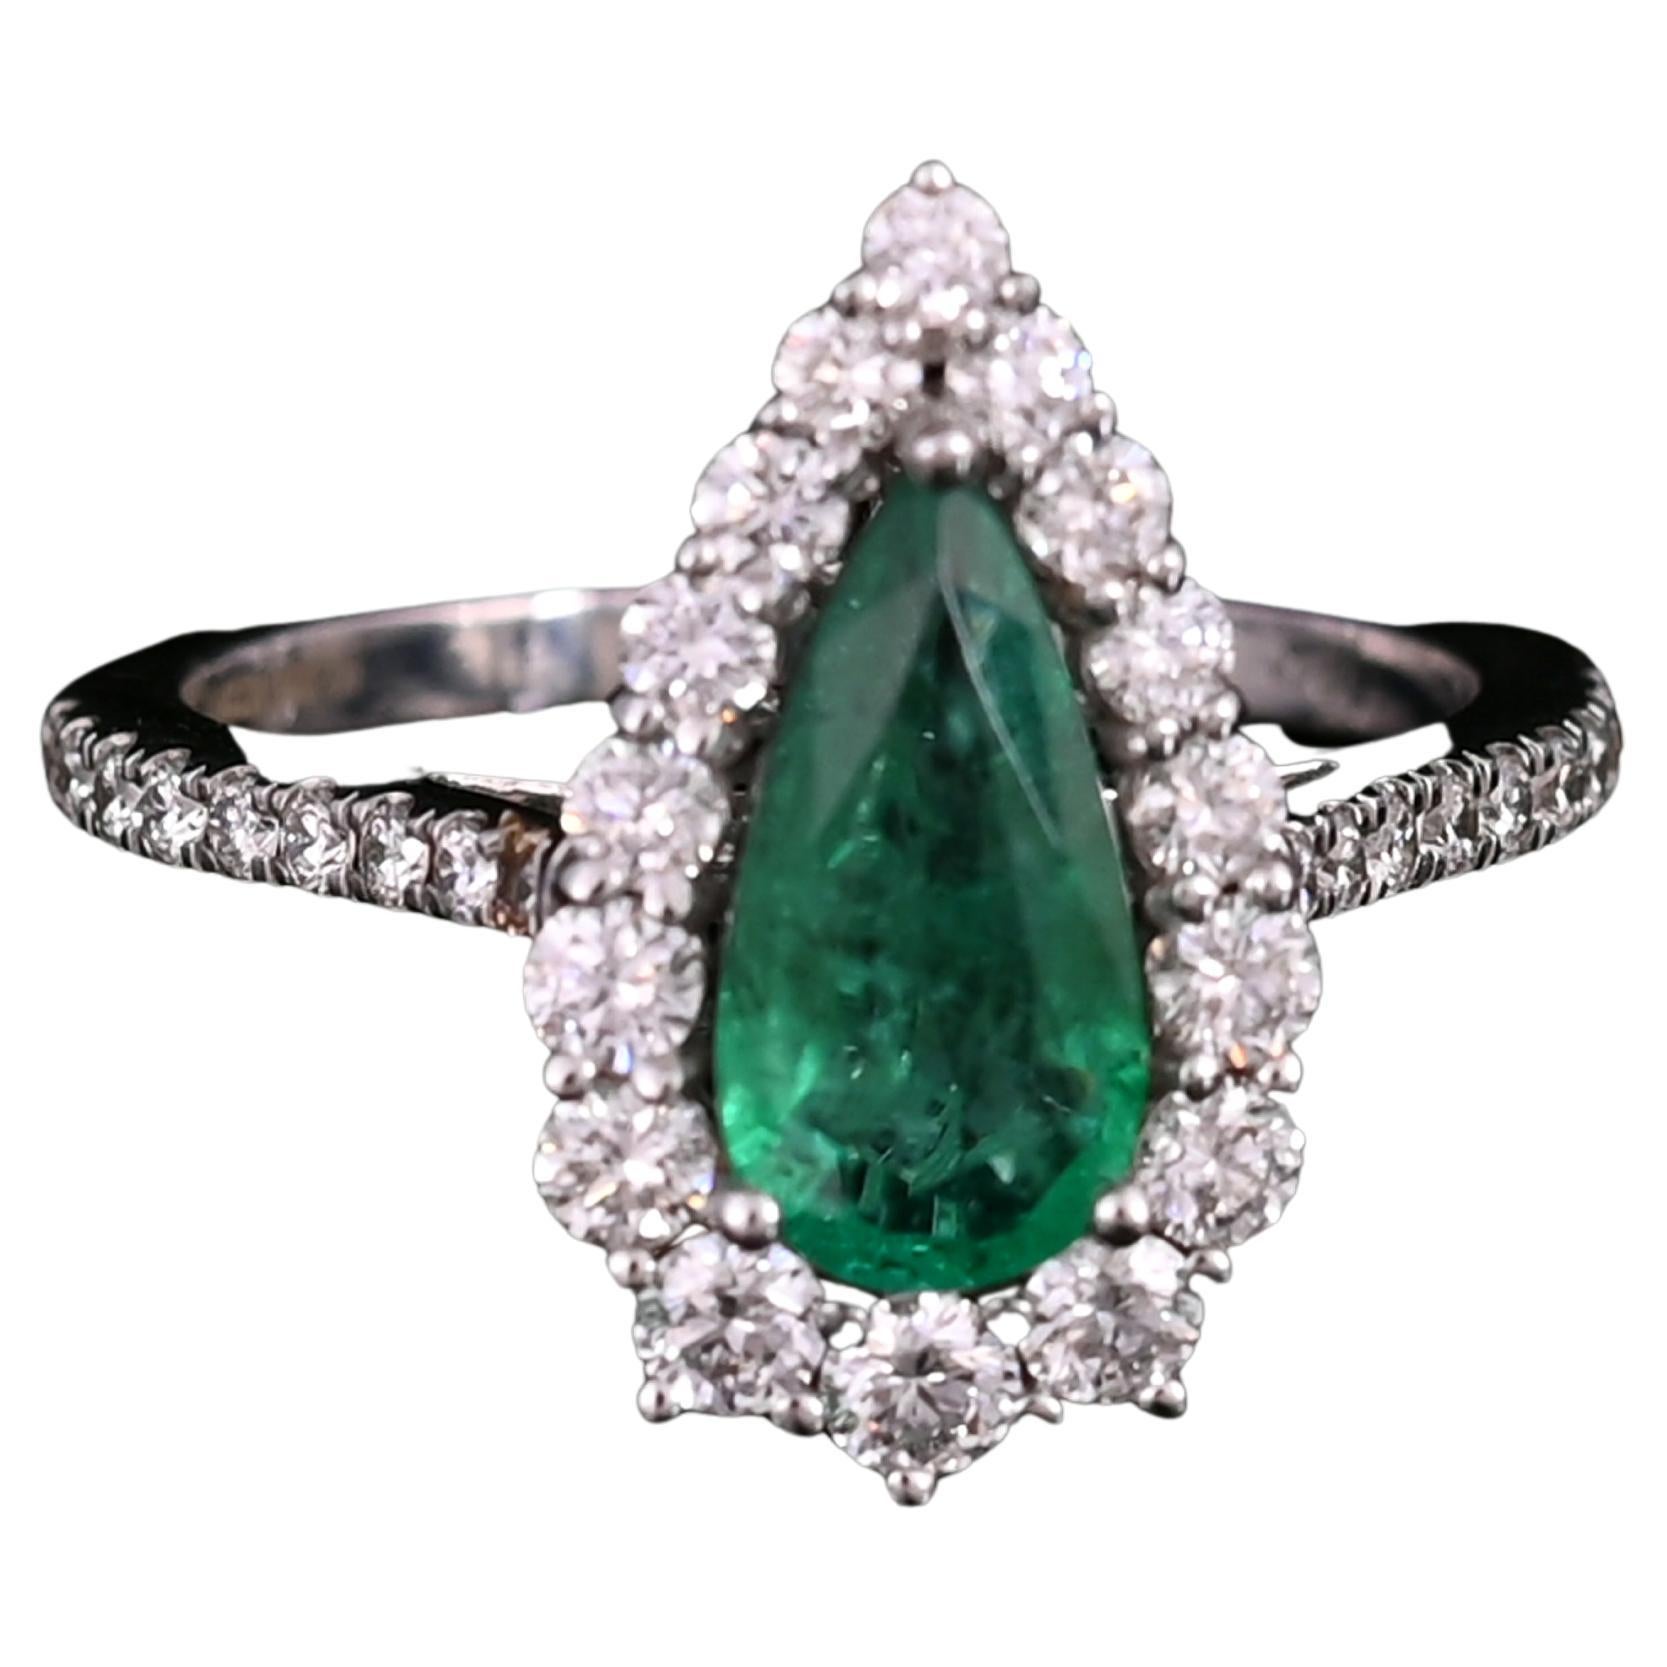 Set in 18K Gold, 1.09 carats, natural Zambian Emerald & Diamond Engagement Ring 